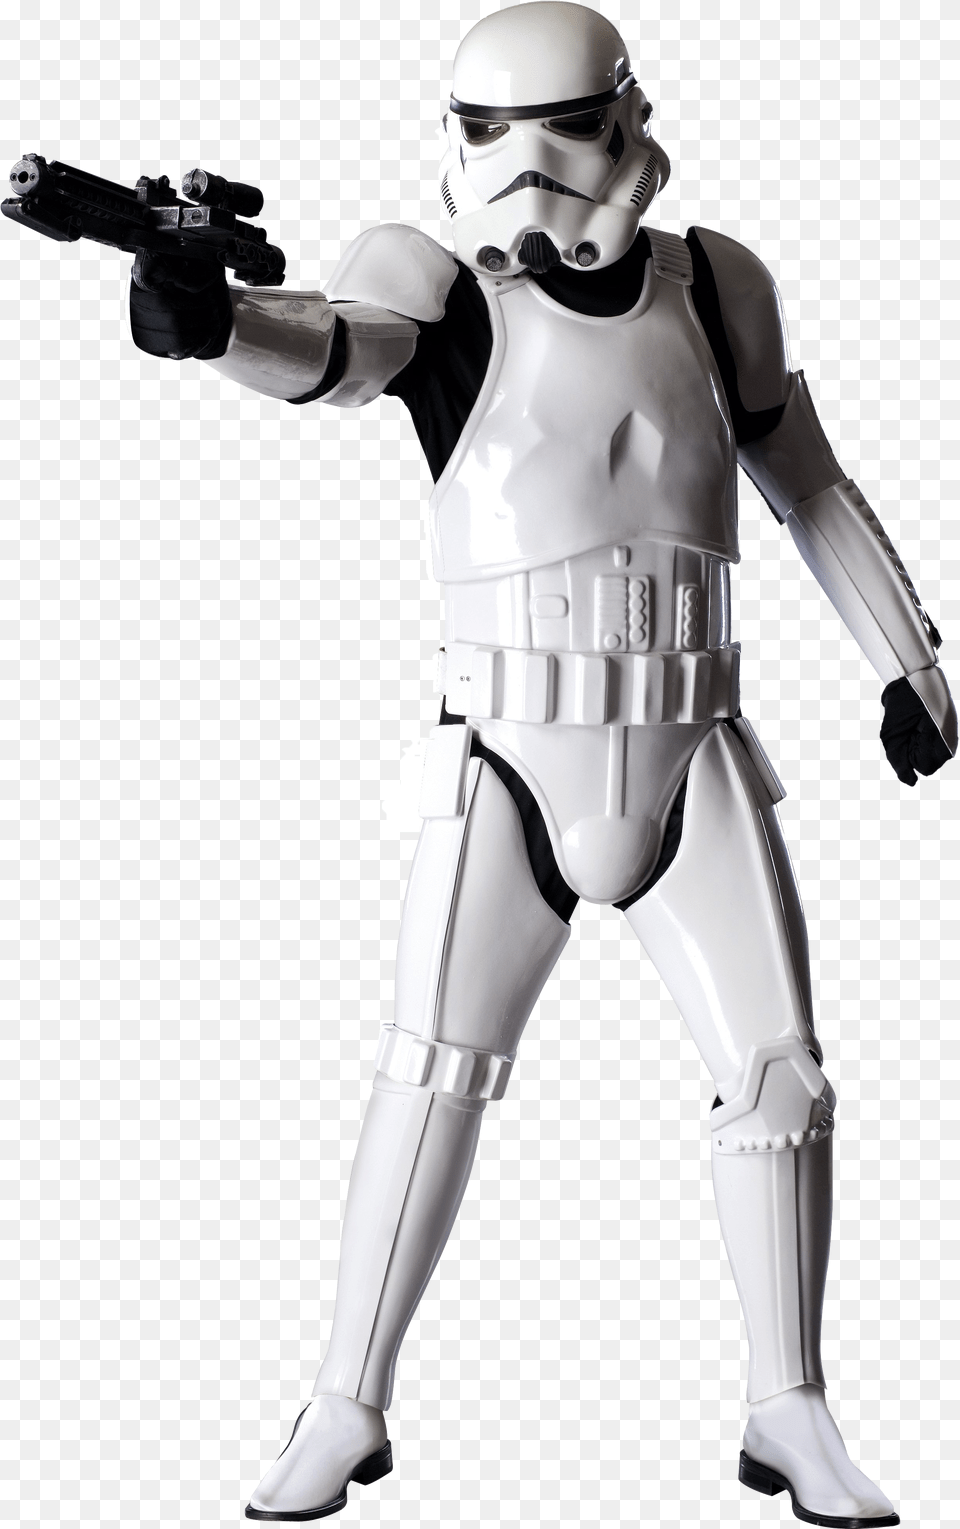 Download Star Wars Stormtrooper Star Wars Stormtrooper Costume, Helmet, Adult, Female, Person Png